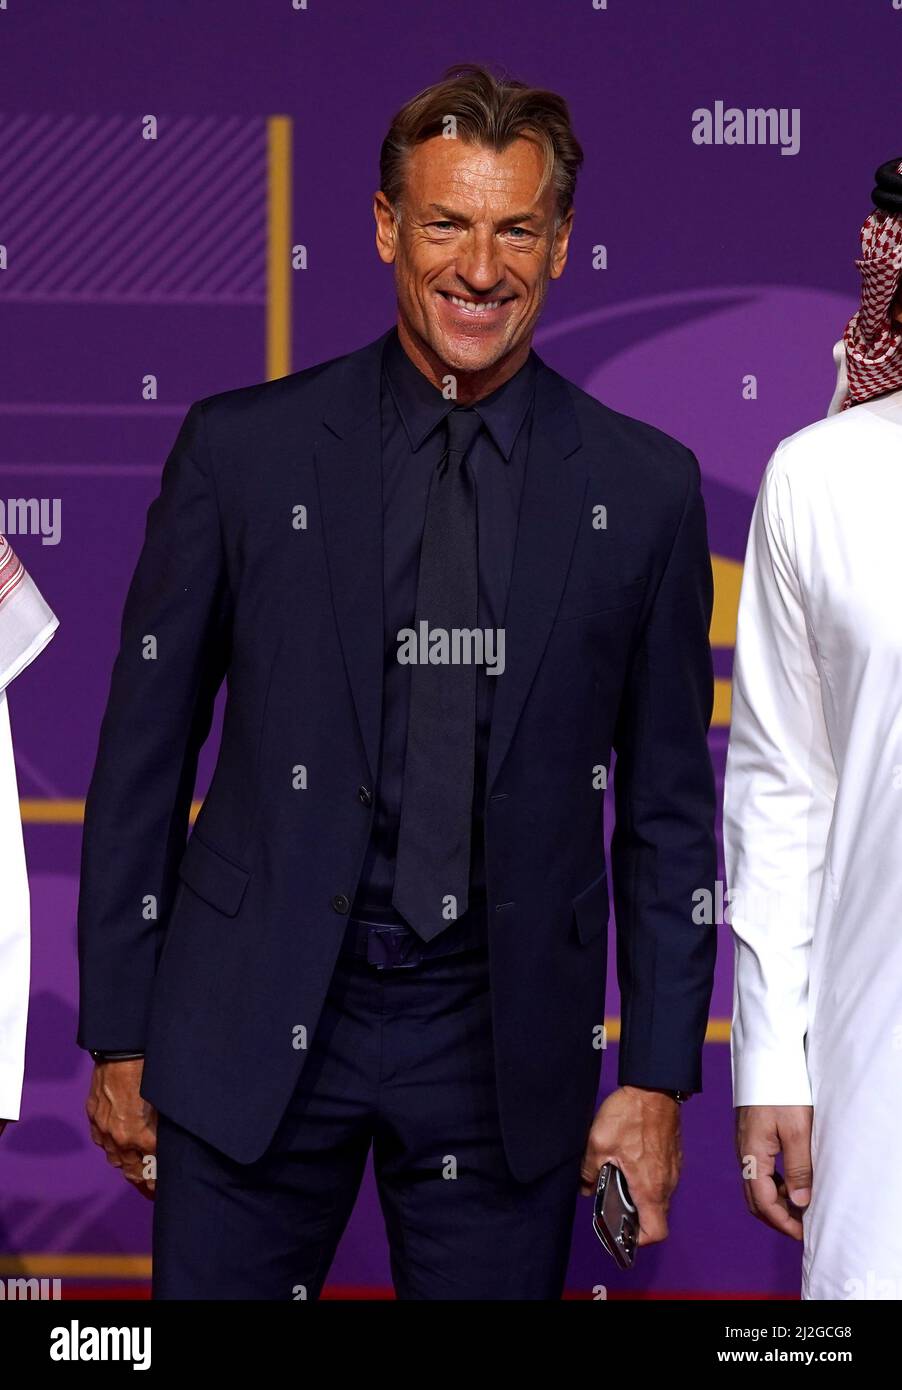 Saudi Arabia manager Herve Renard during the FIFA World Cup Qatar